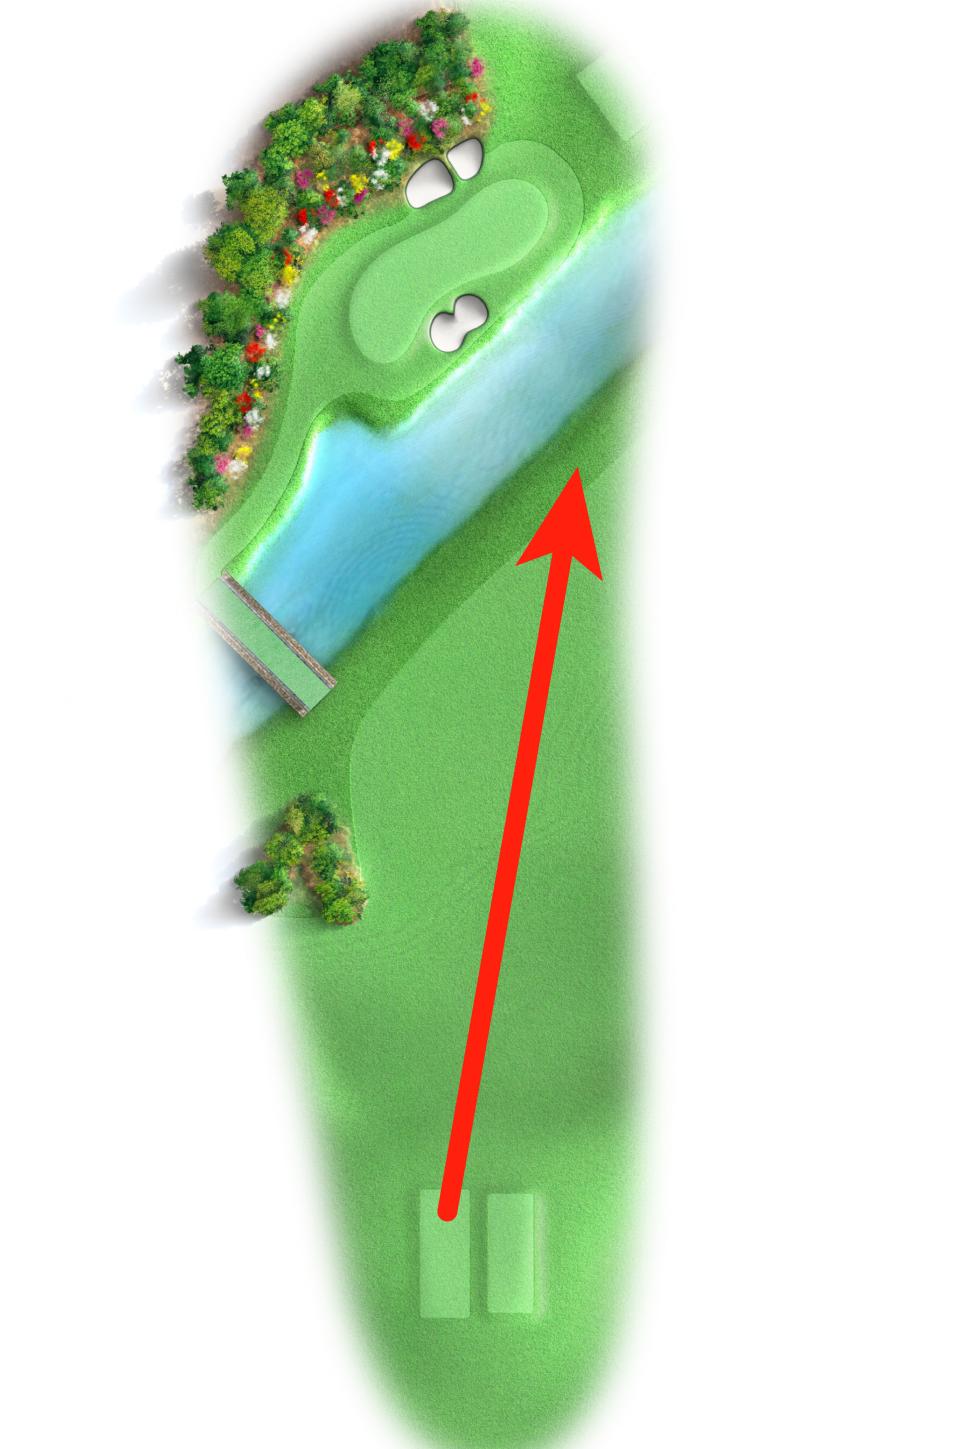 https://www.golfdigest.com/content/dam/images/golfdigest/fullset/2024/4/augusta-national-bogey-golfers-guide-twelth-hole.jpg